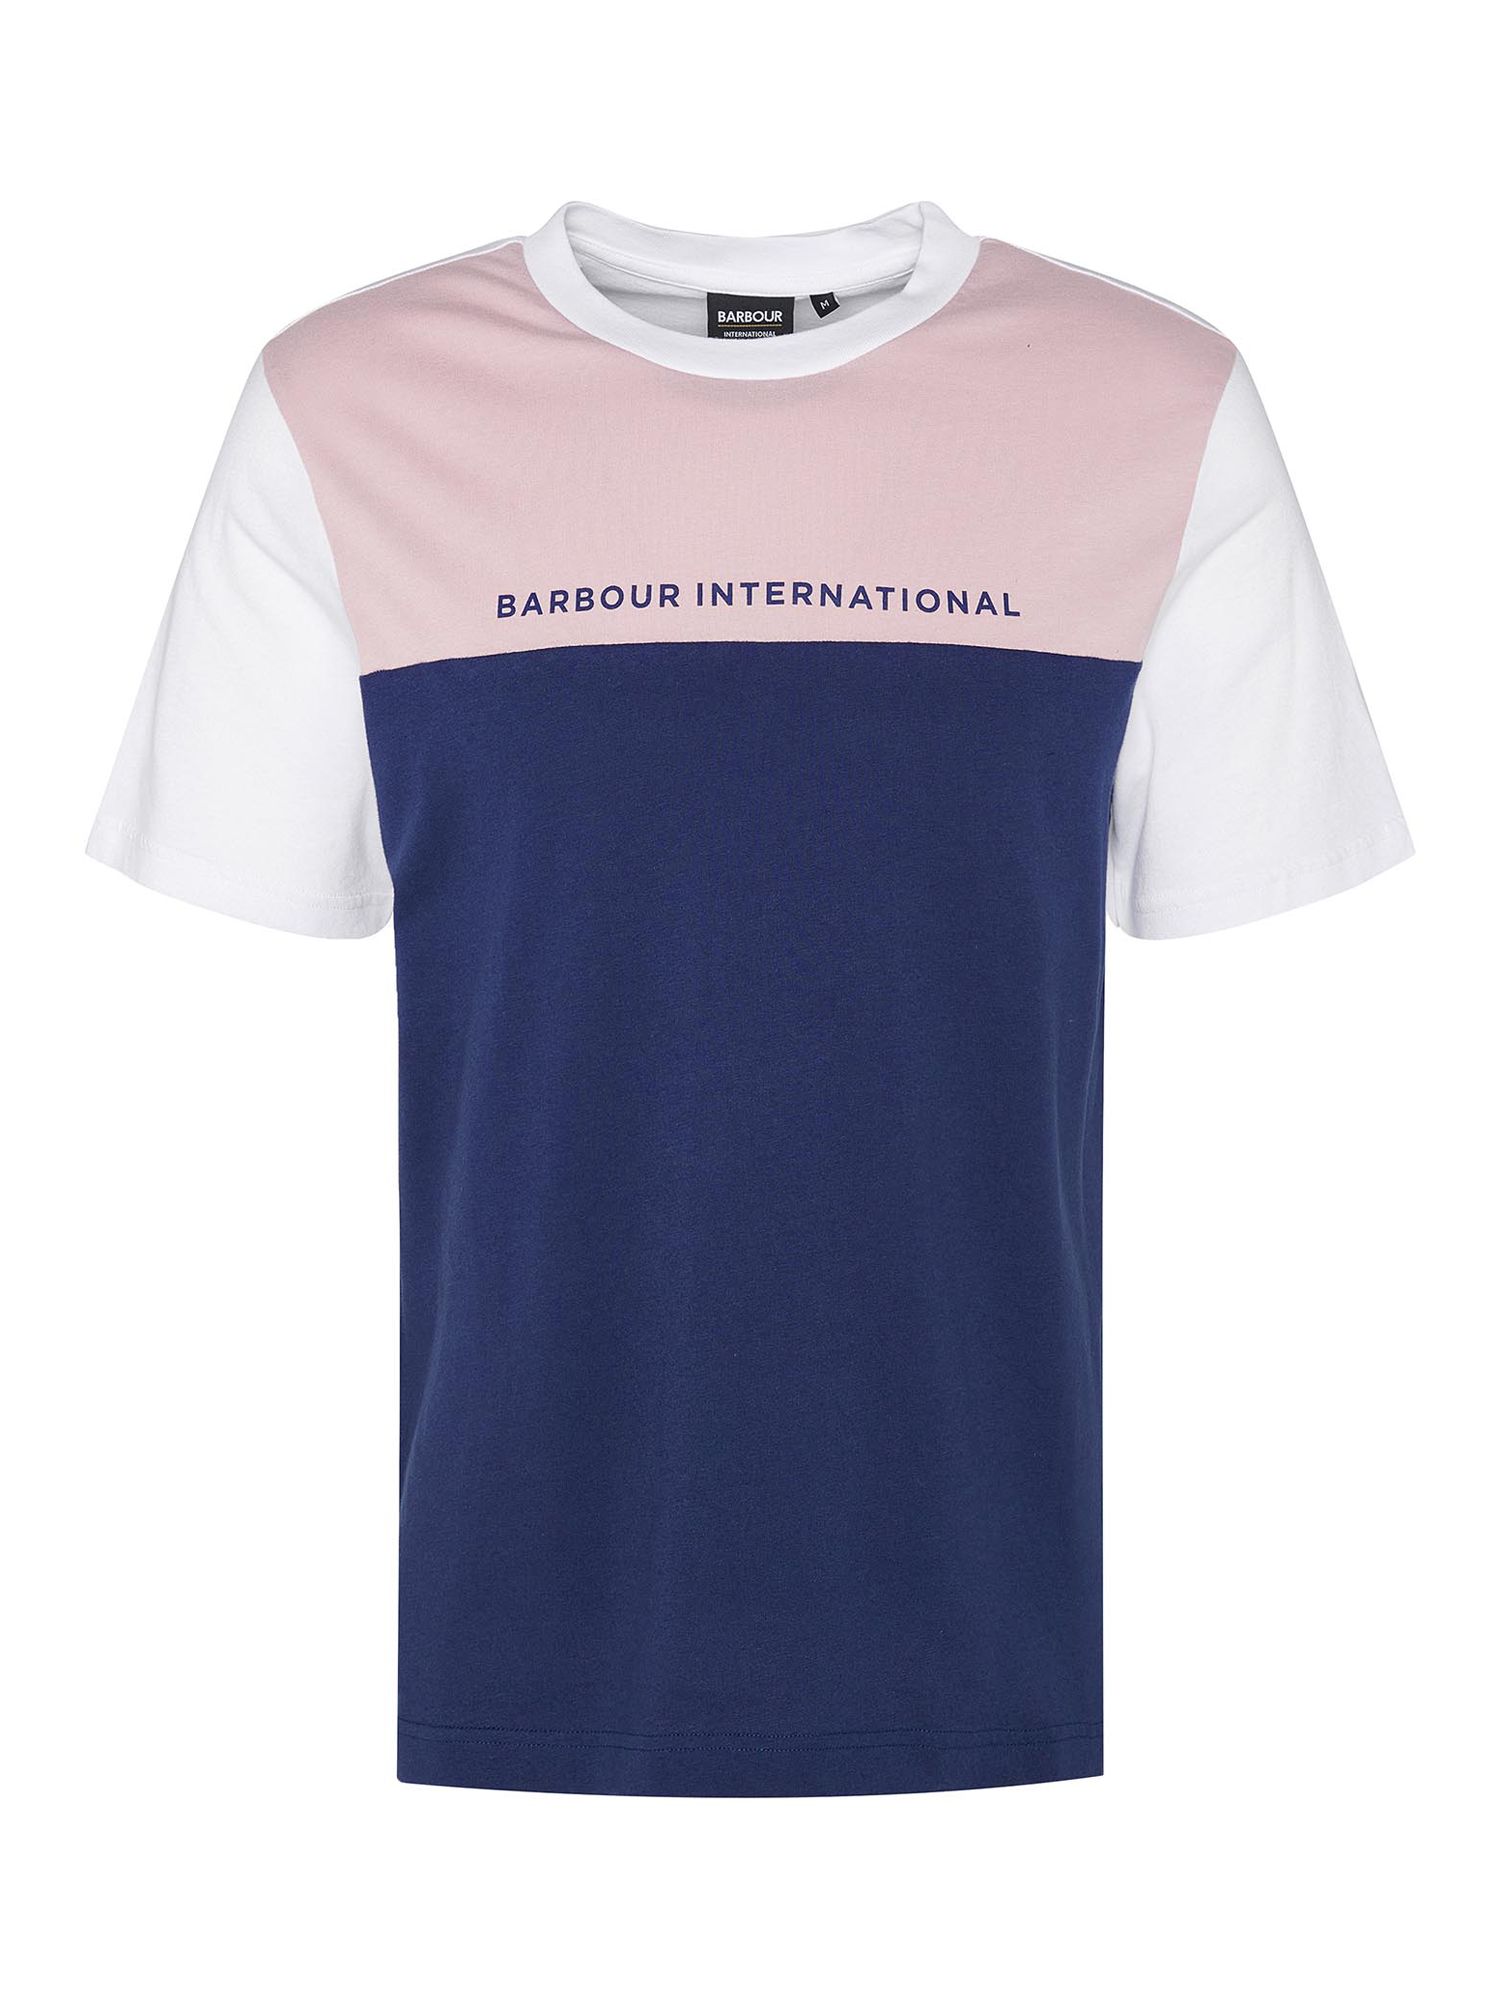 Barbour International Mondrian Colour T-Shirt, White/Blue, S